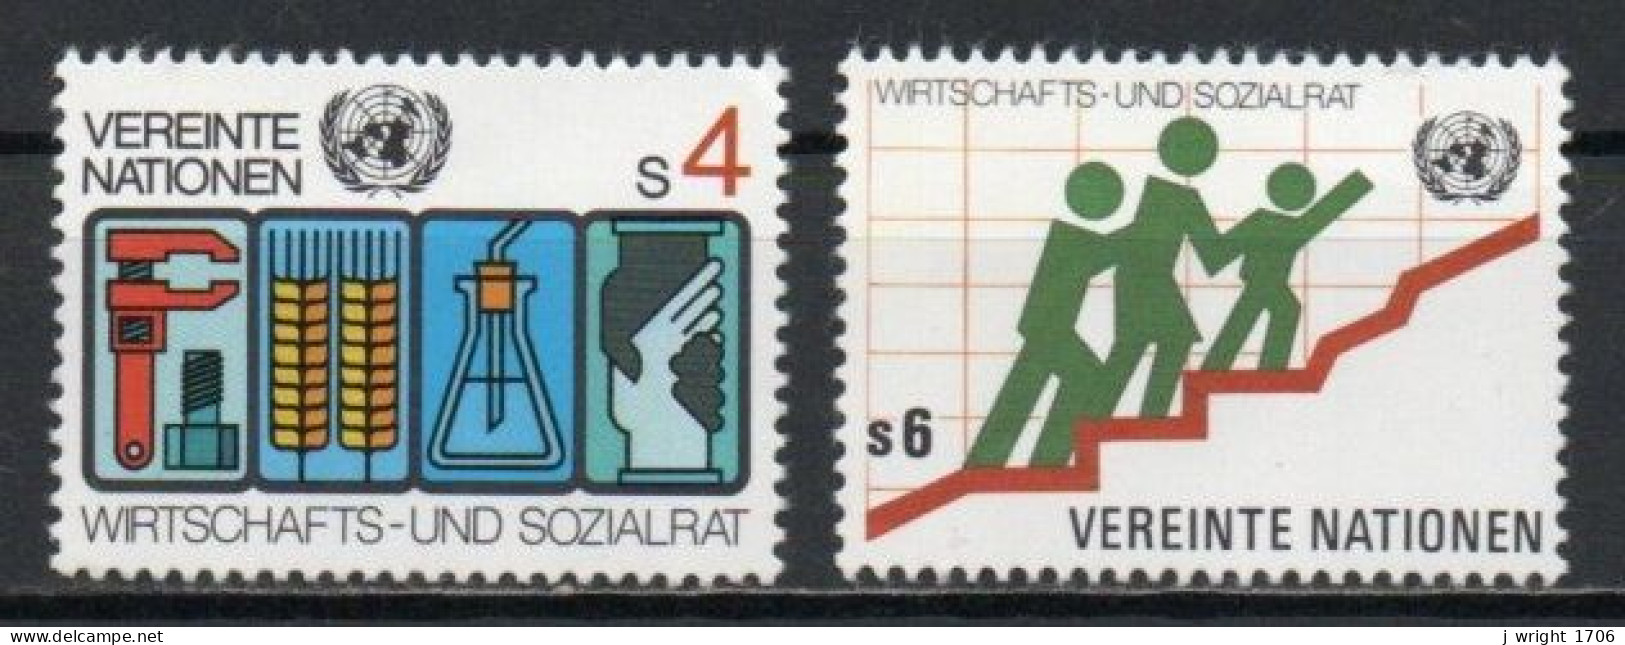 UN/Vienna, 1980, Economic & Social Council, Set, MNH - Ungebraucht